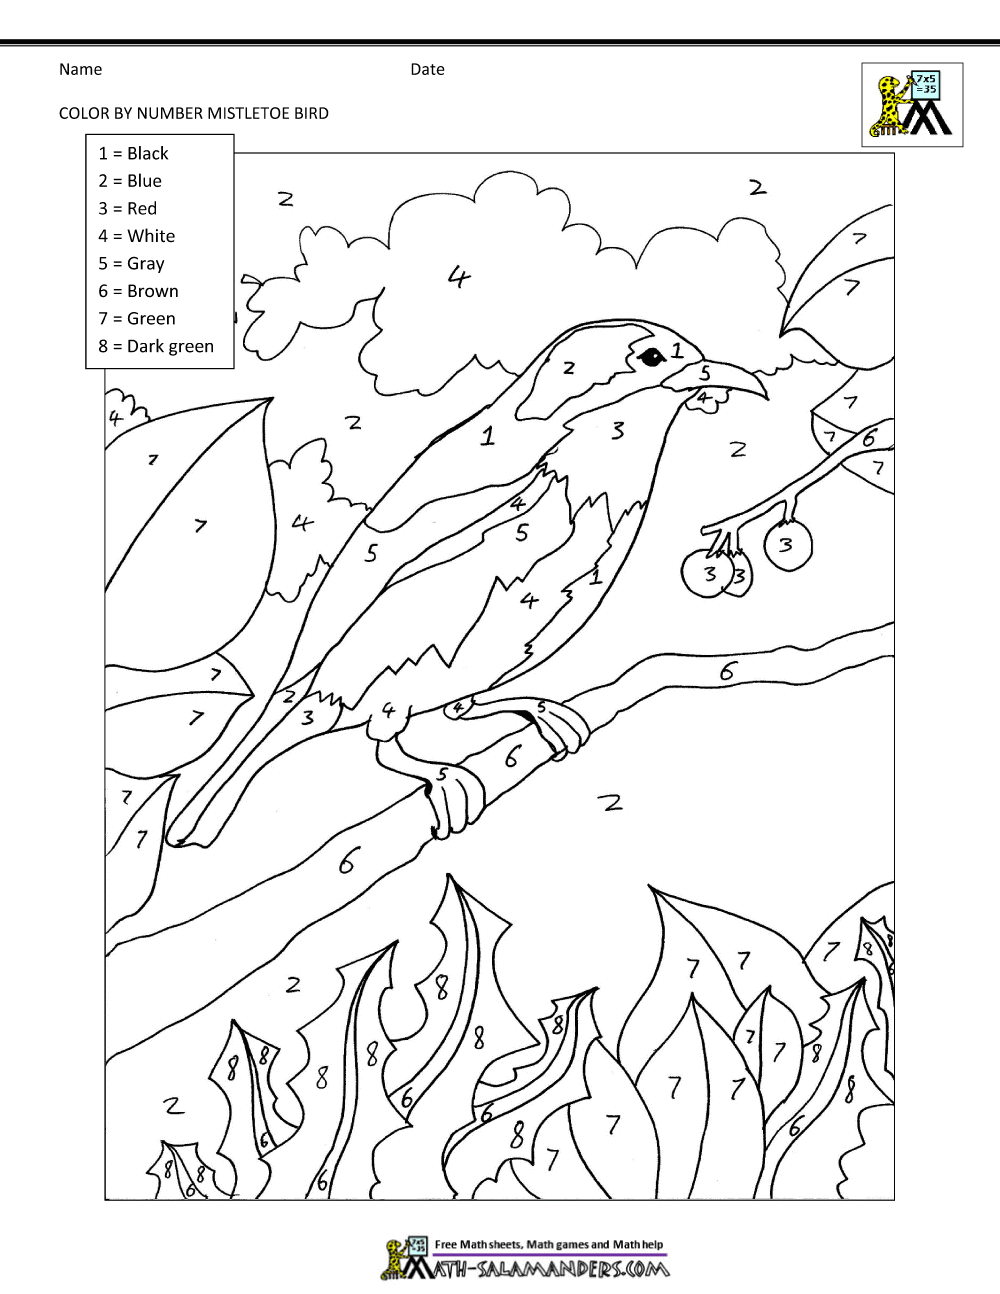 Mistletoe Bird coloring #18, Download drawings